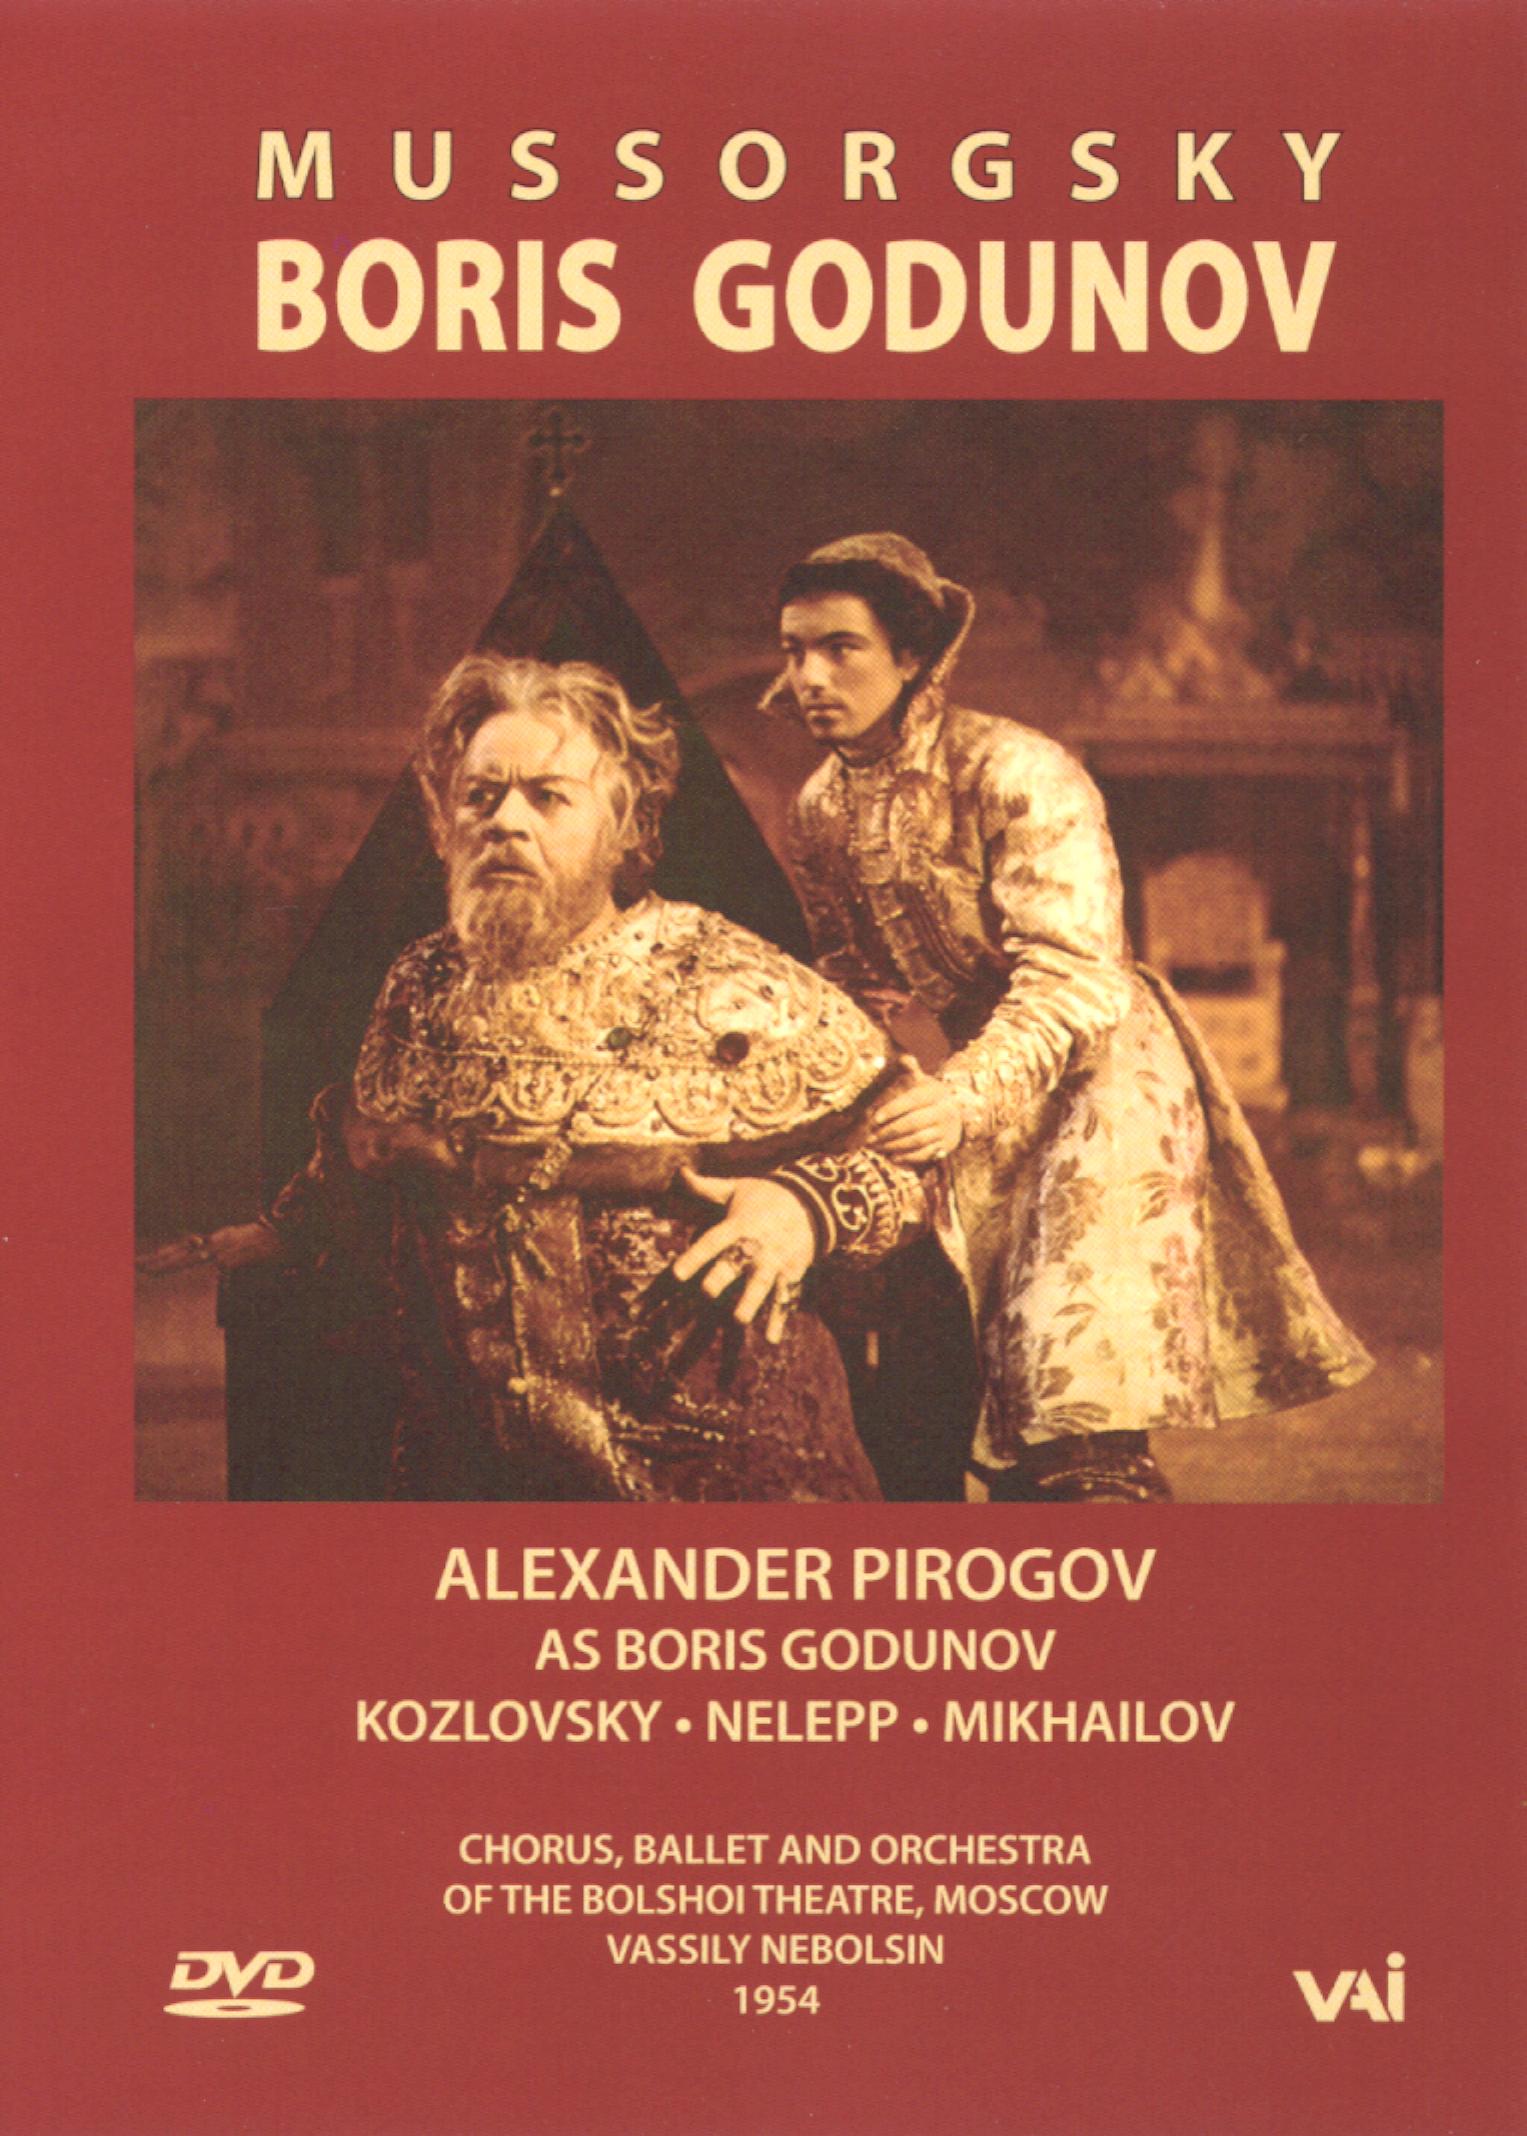 Boris Godunov - Where to Watch and Stream